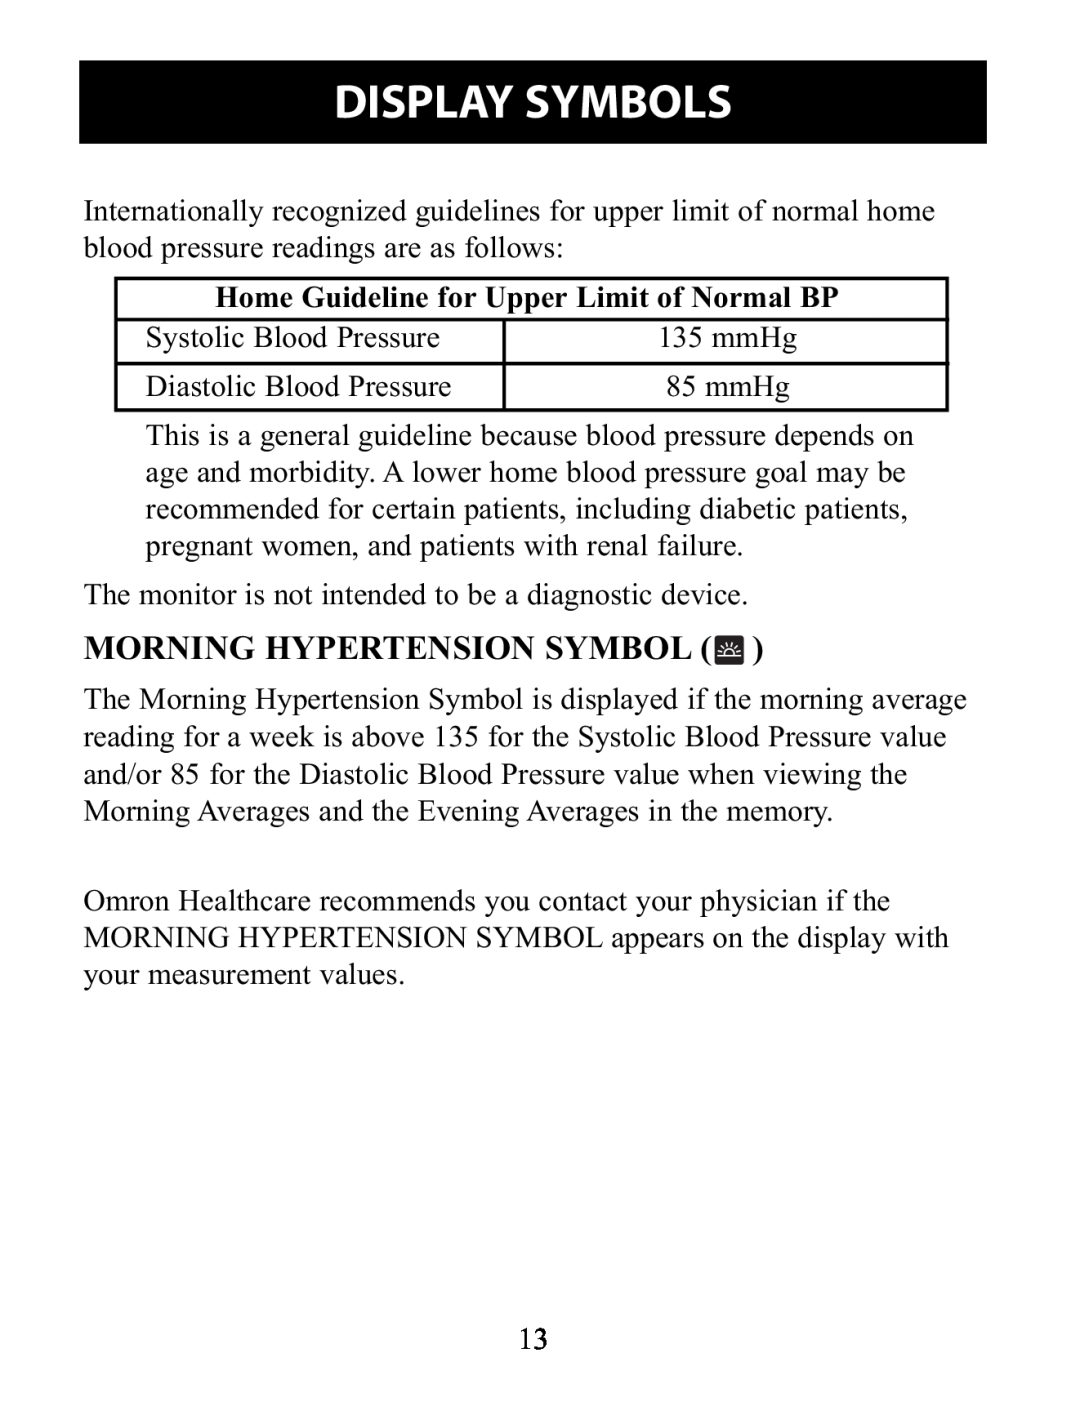 Omron Healthcare BP791IT Morning Hypertension Symbol, Home Guideline for Upper Limit of Normal BP, Display Symbols 